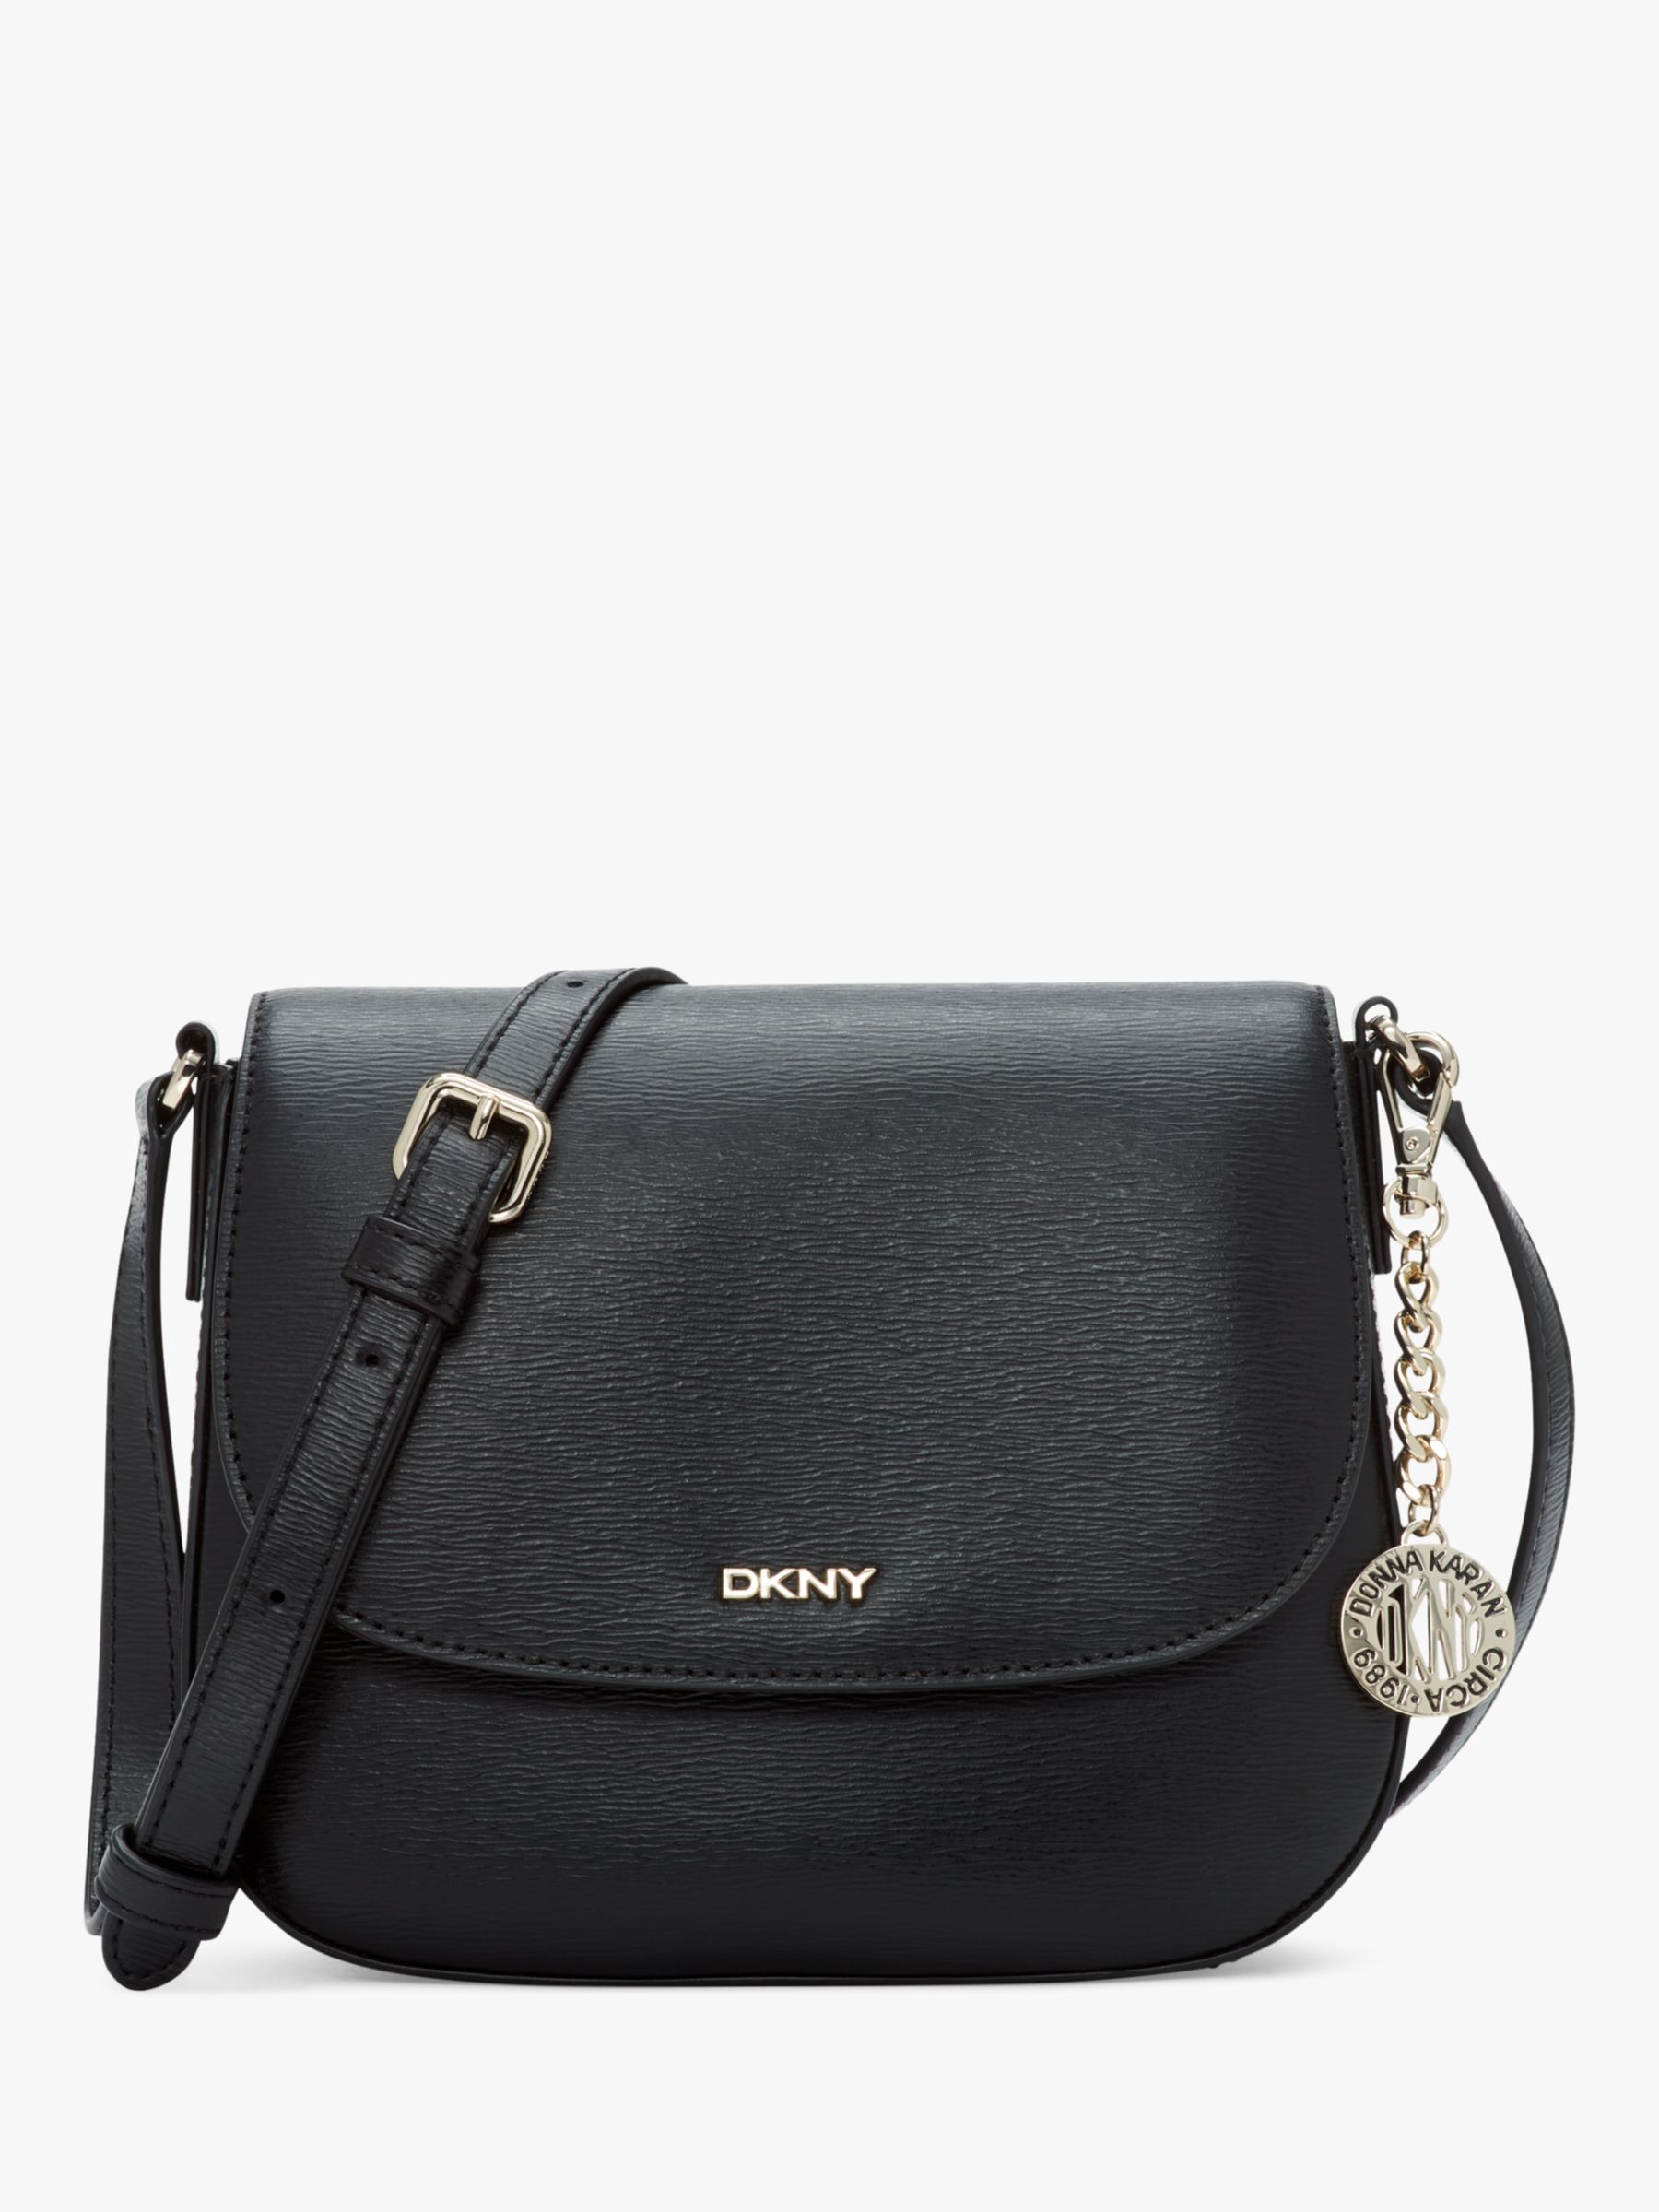 DKNY bryant saffiano leather crossbody in black